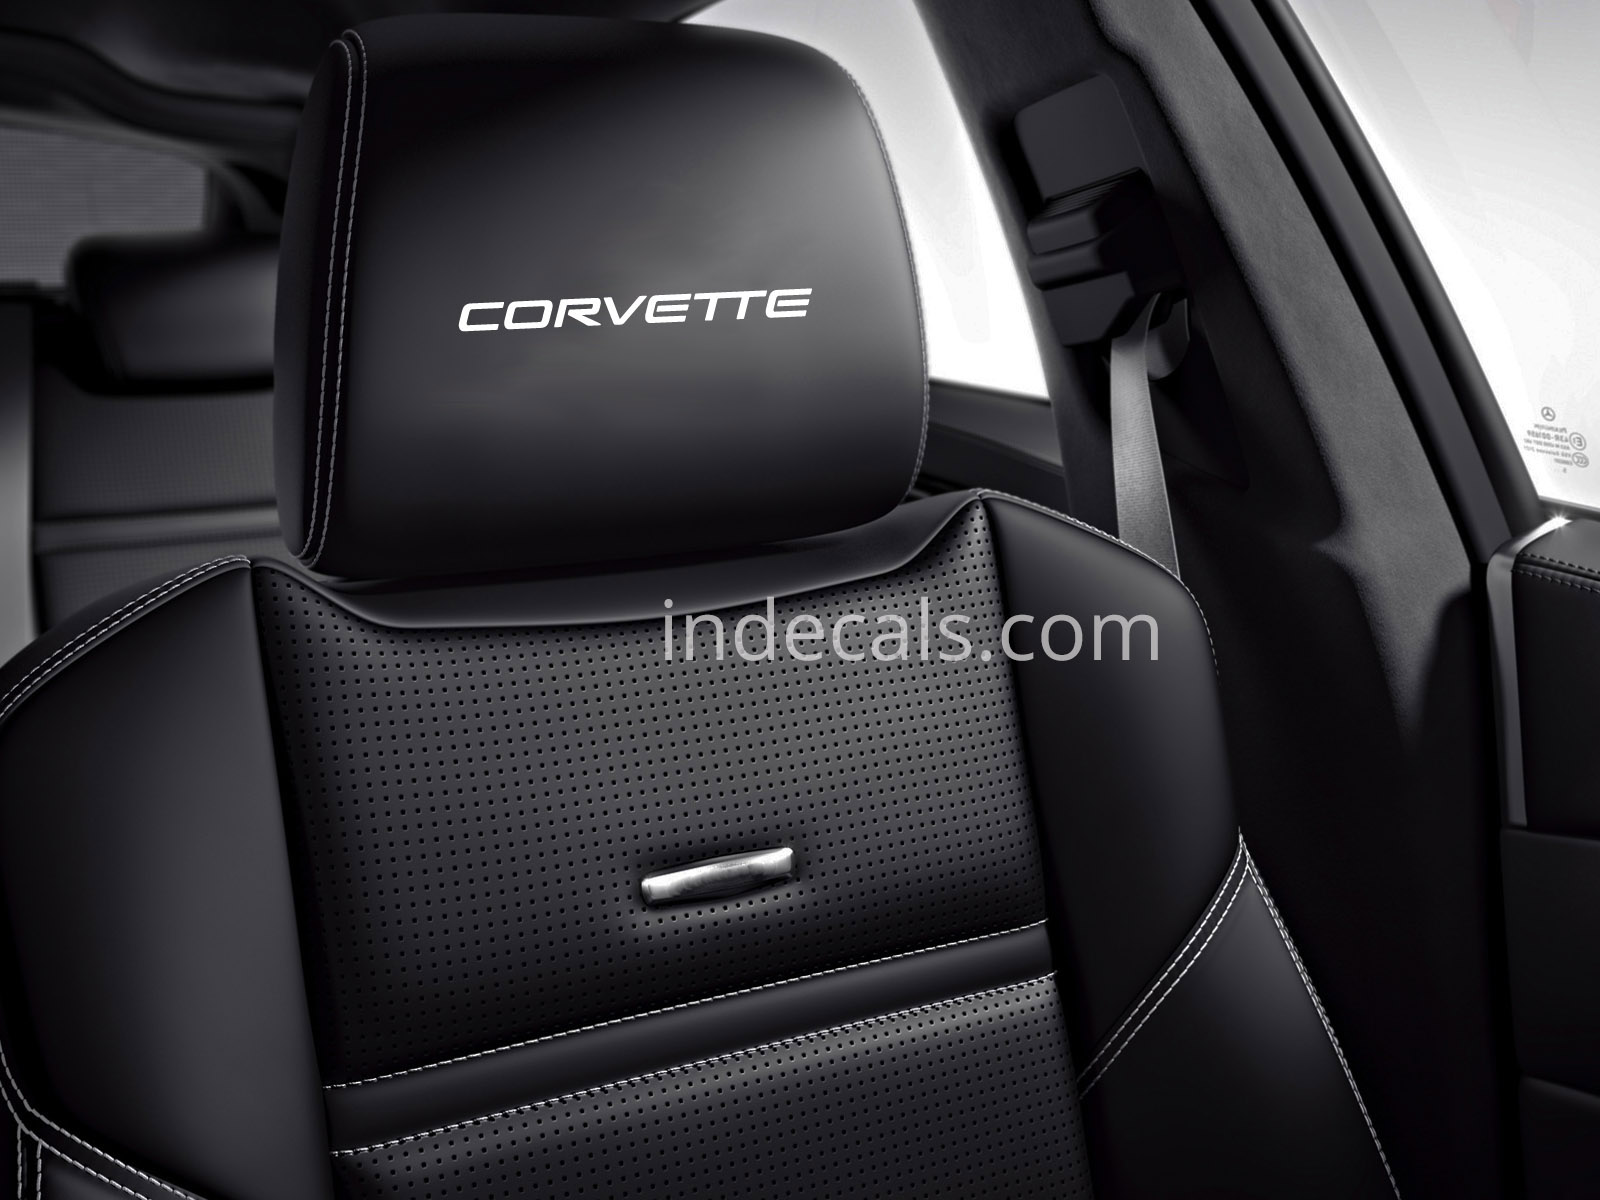 6 x Corvette Stickers for Headrests - White